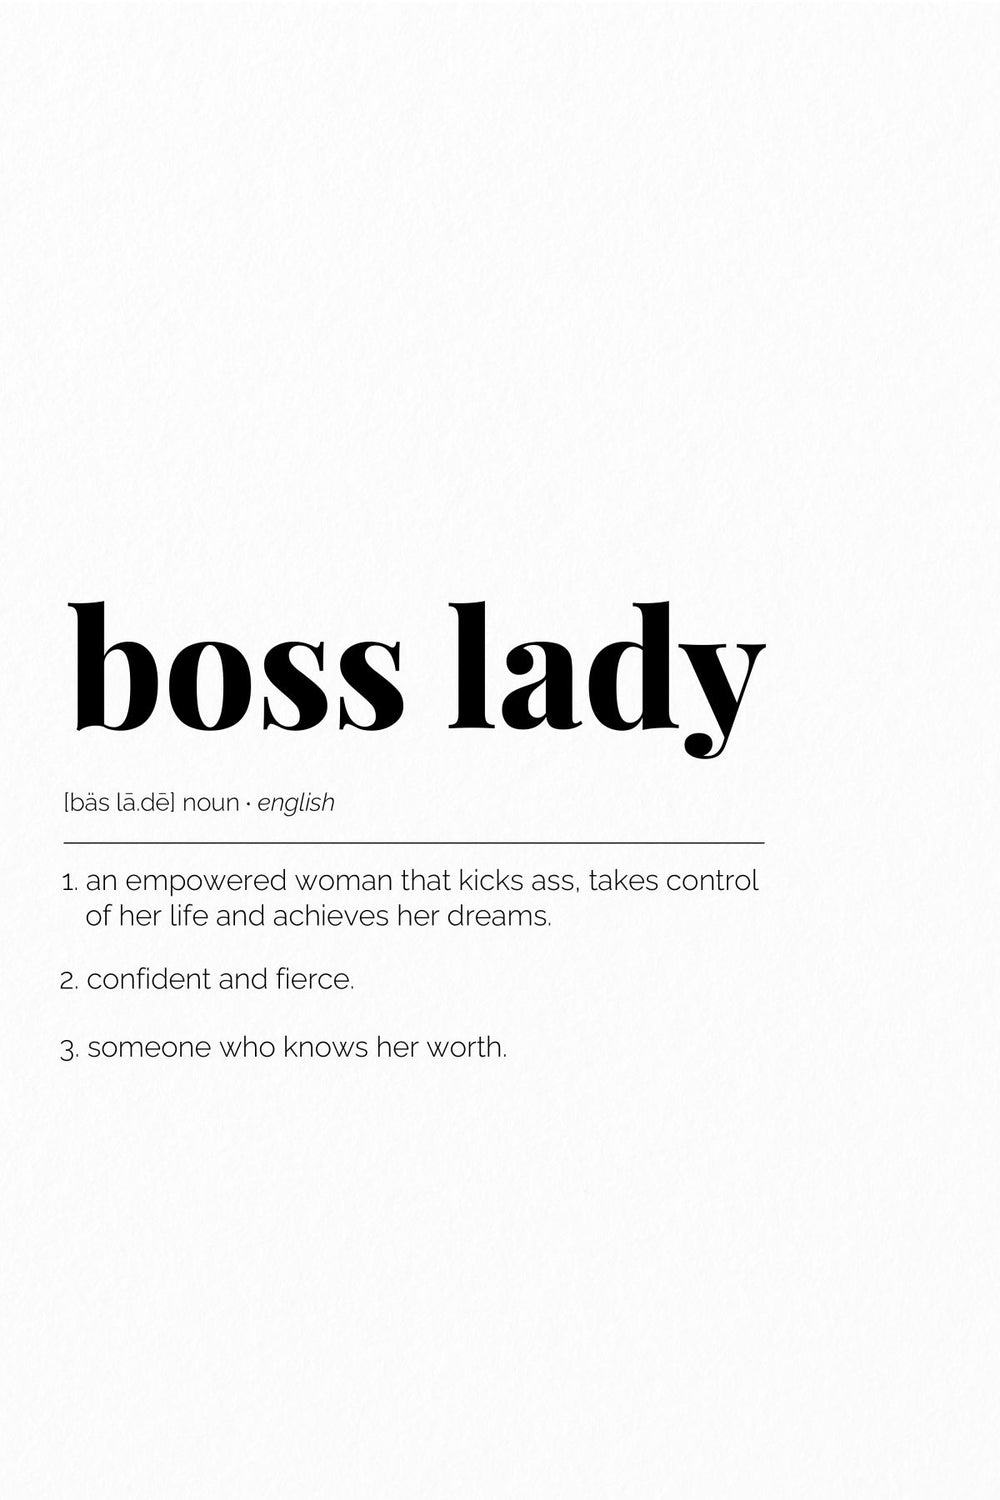 Boss Lady Definition